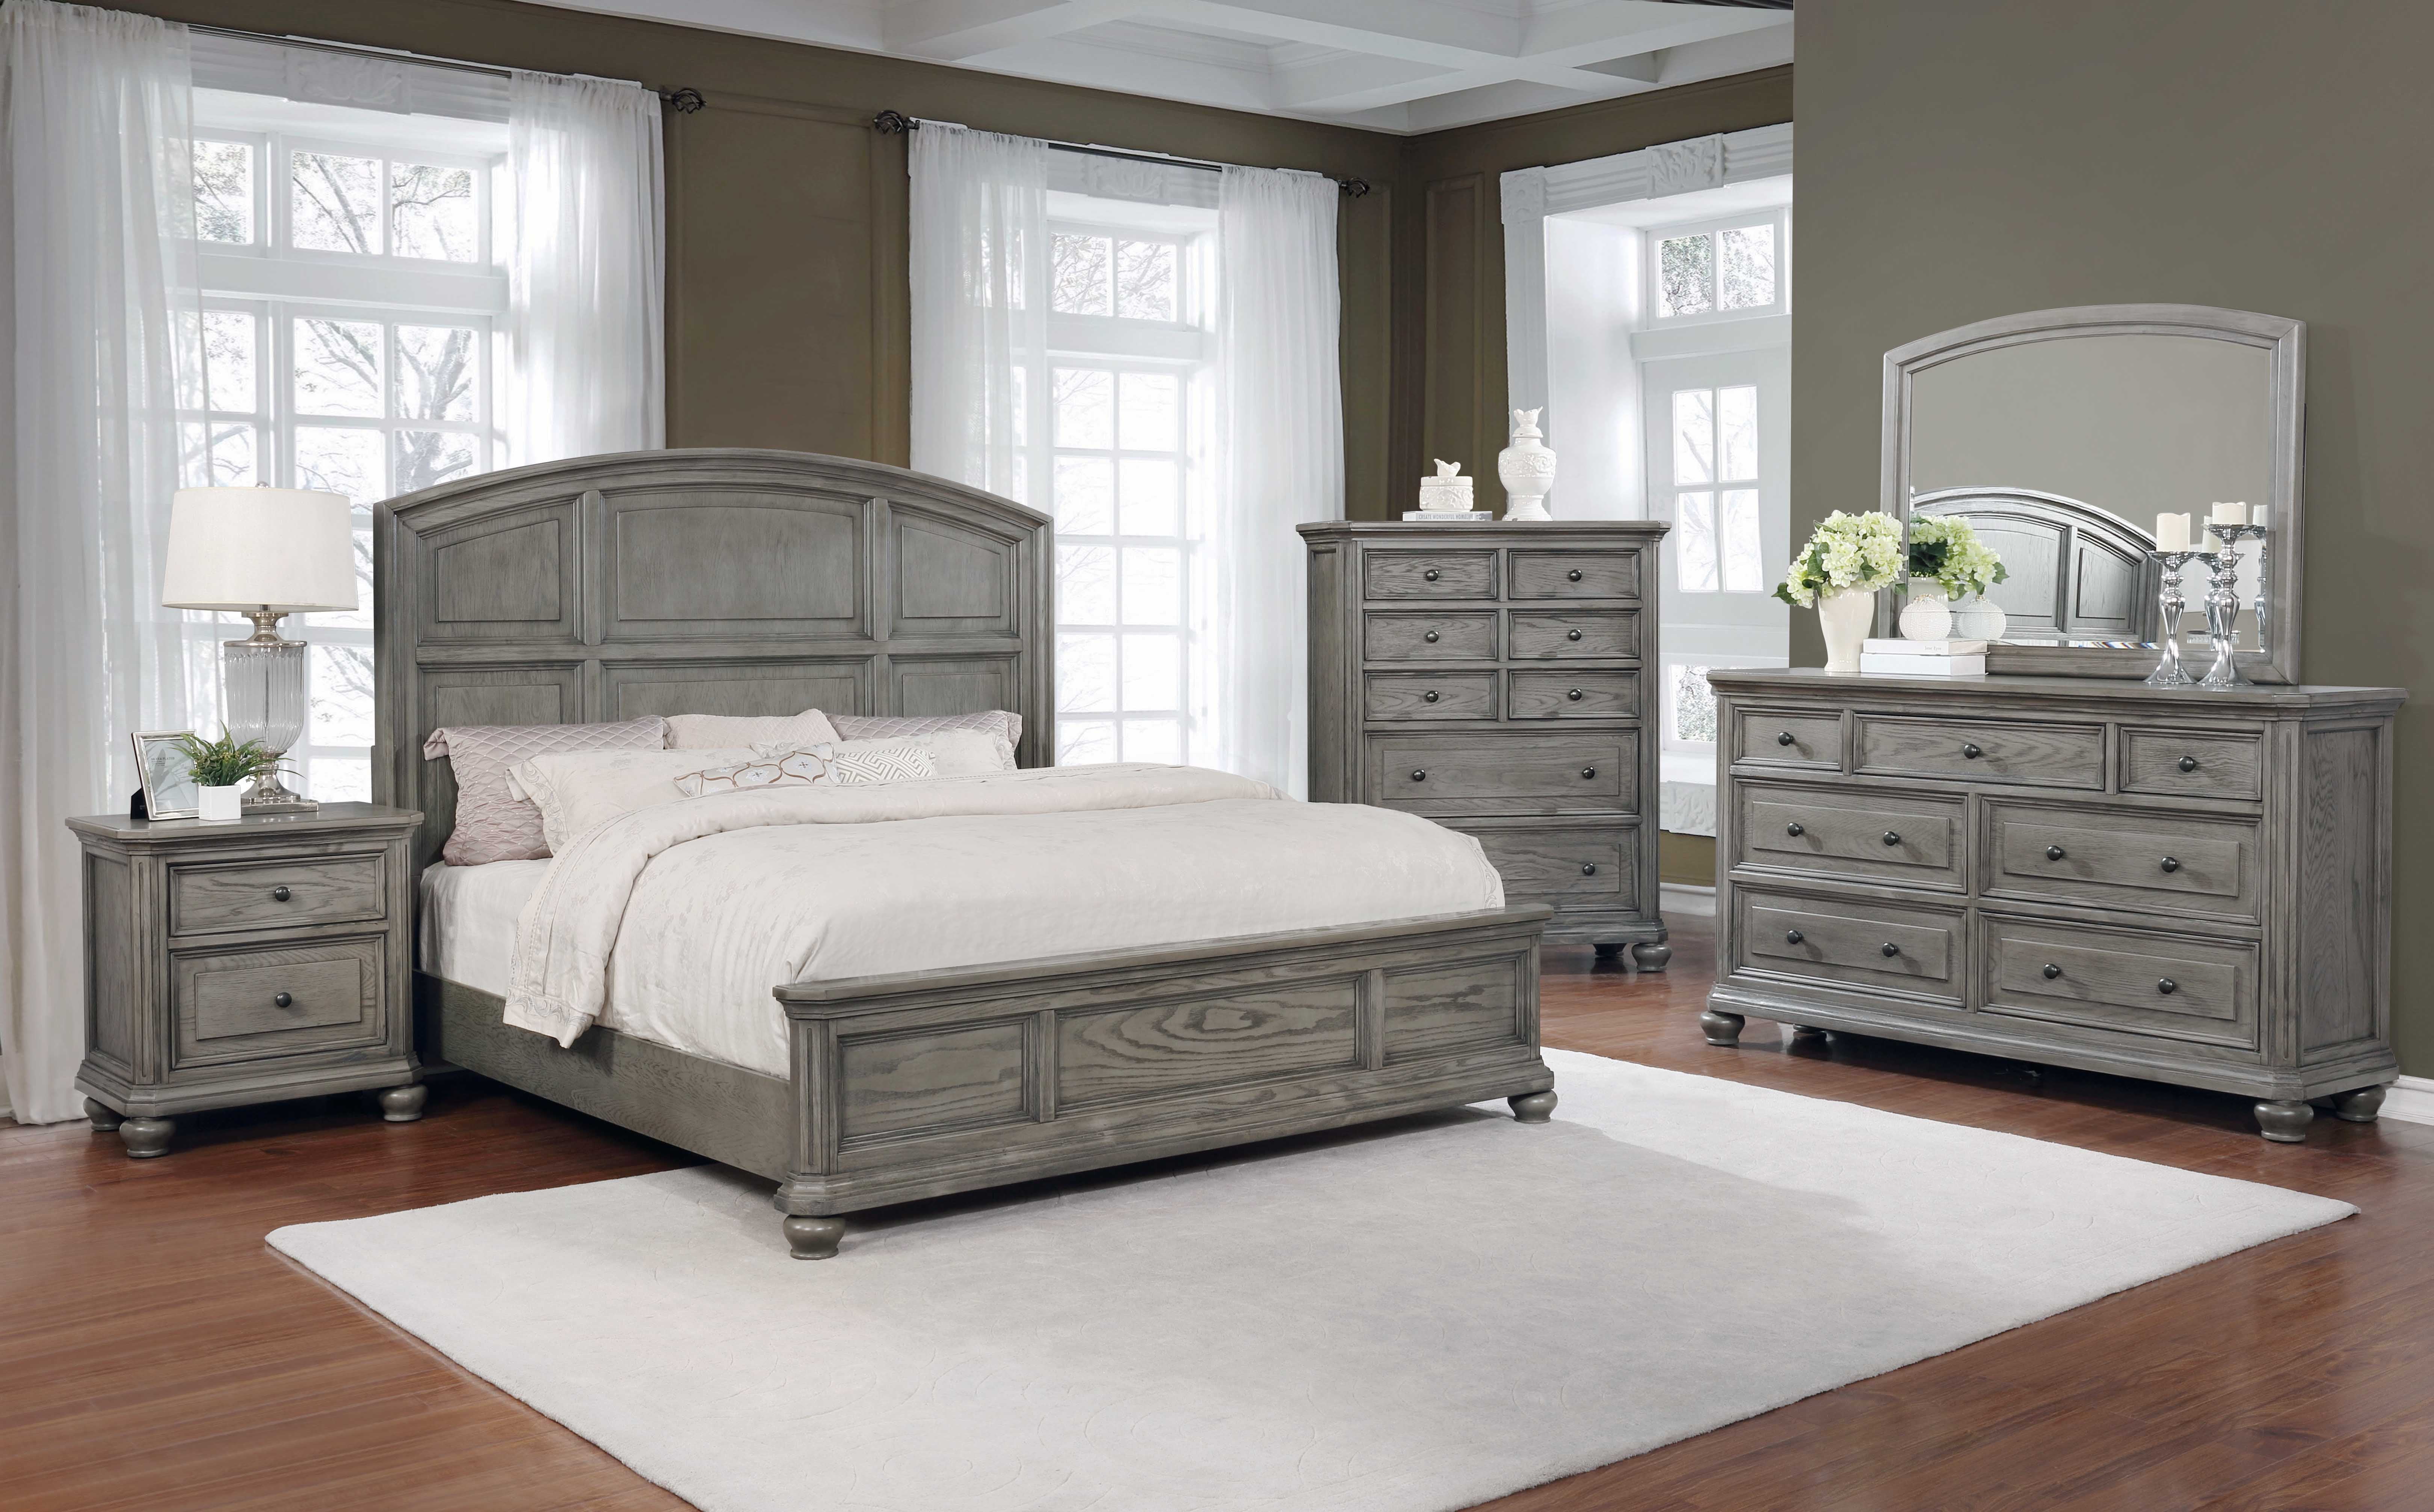 Best Master Furniture 5 Pcs Eastern King Bedroom Set in Grey Rustic Wood - Walmart.com